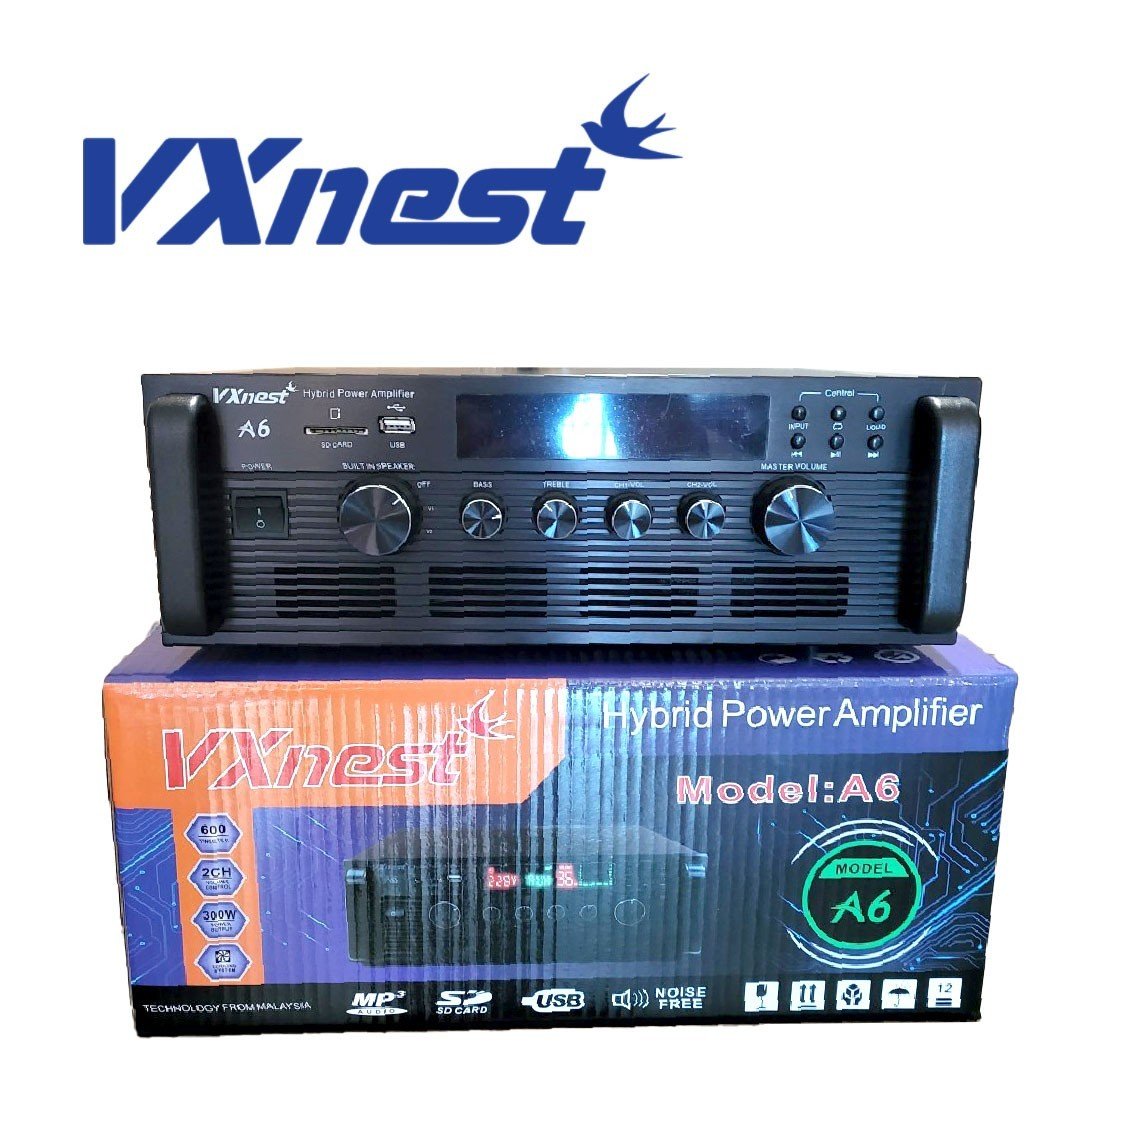 Amplifier Vxnest A6, nhập khẩu Malaysia